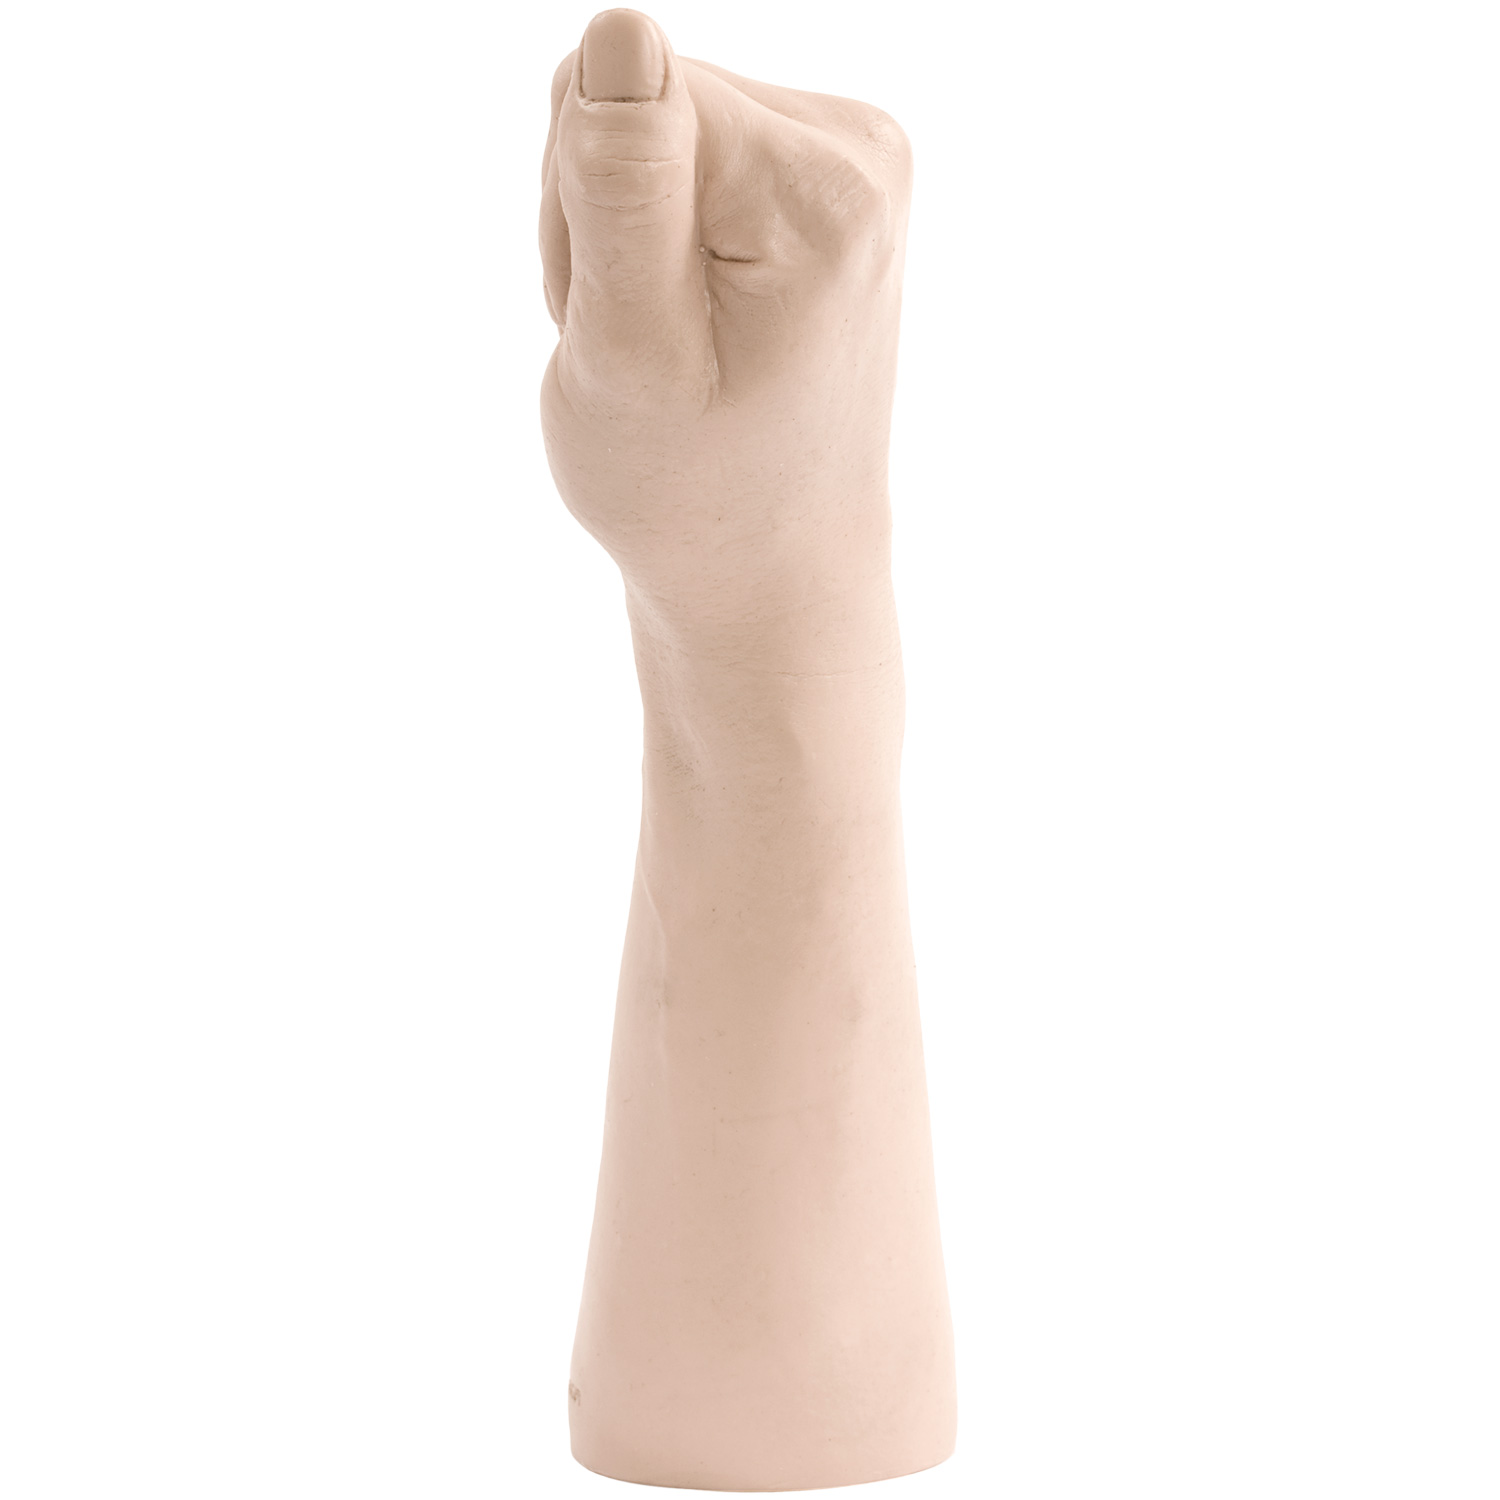 Belladonnas Bitch Fist Fistinghand - Nude